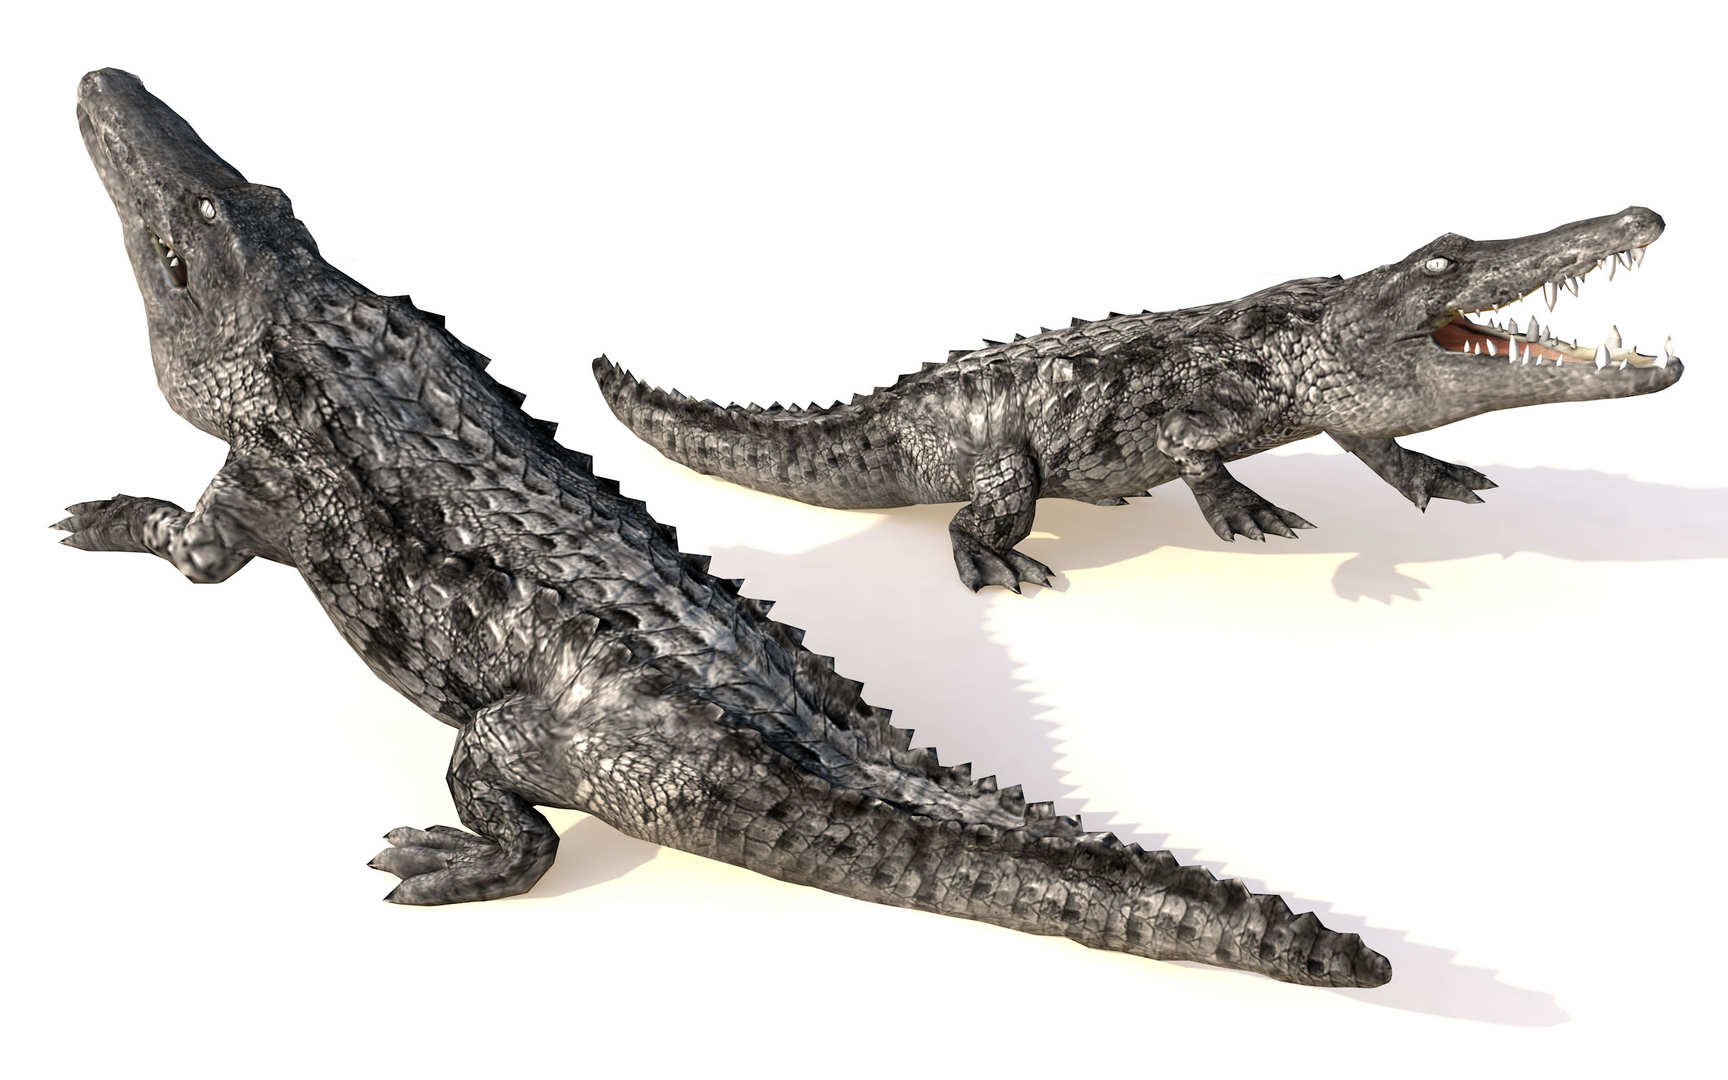 Black alligator crocodile animations 3D model - TurboSquid 1653273